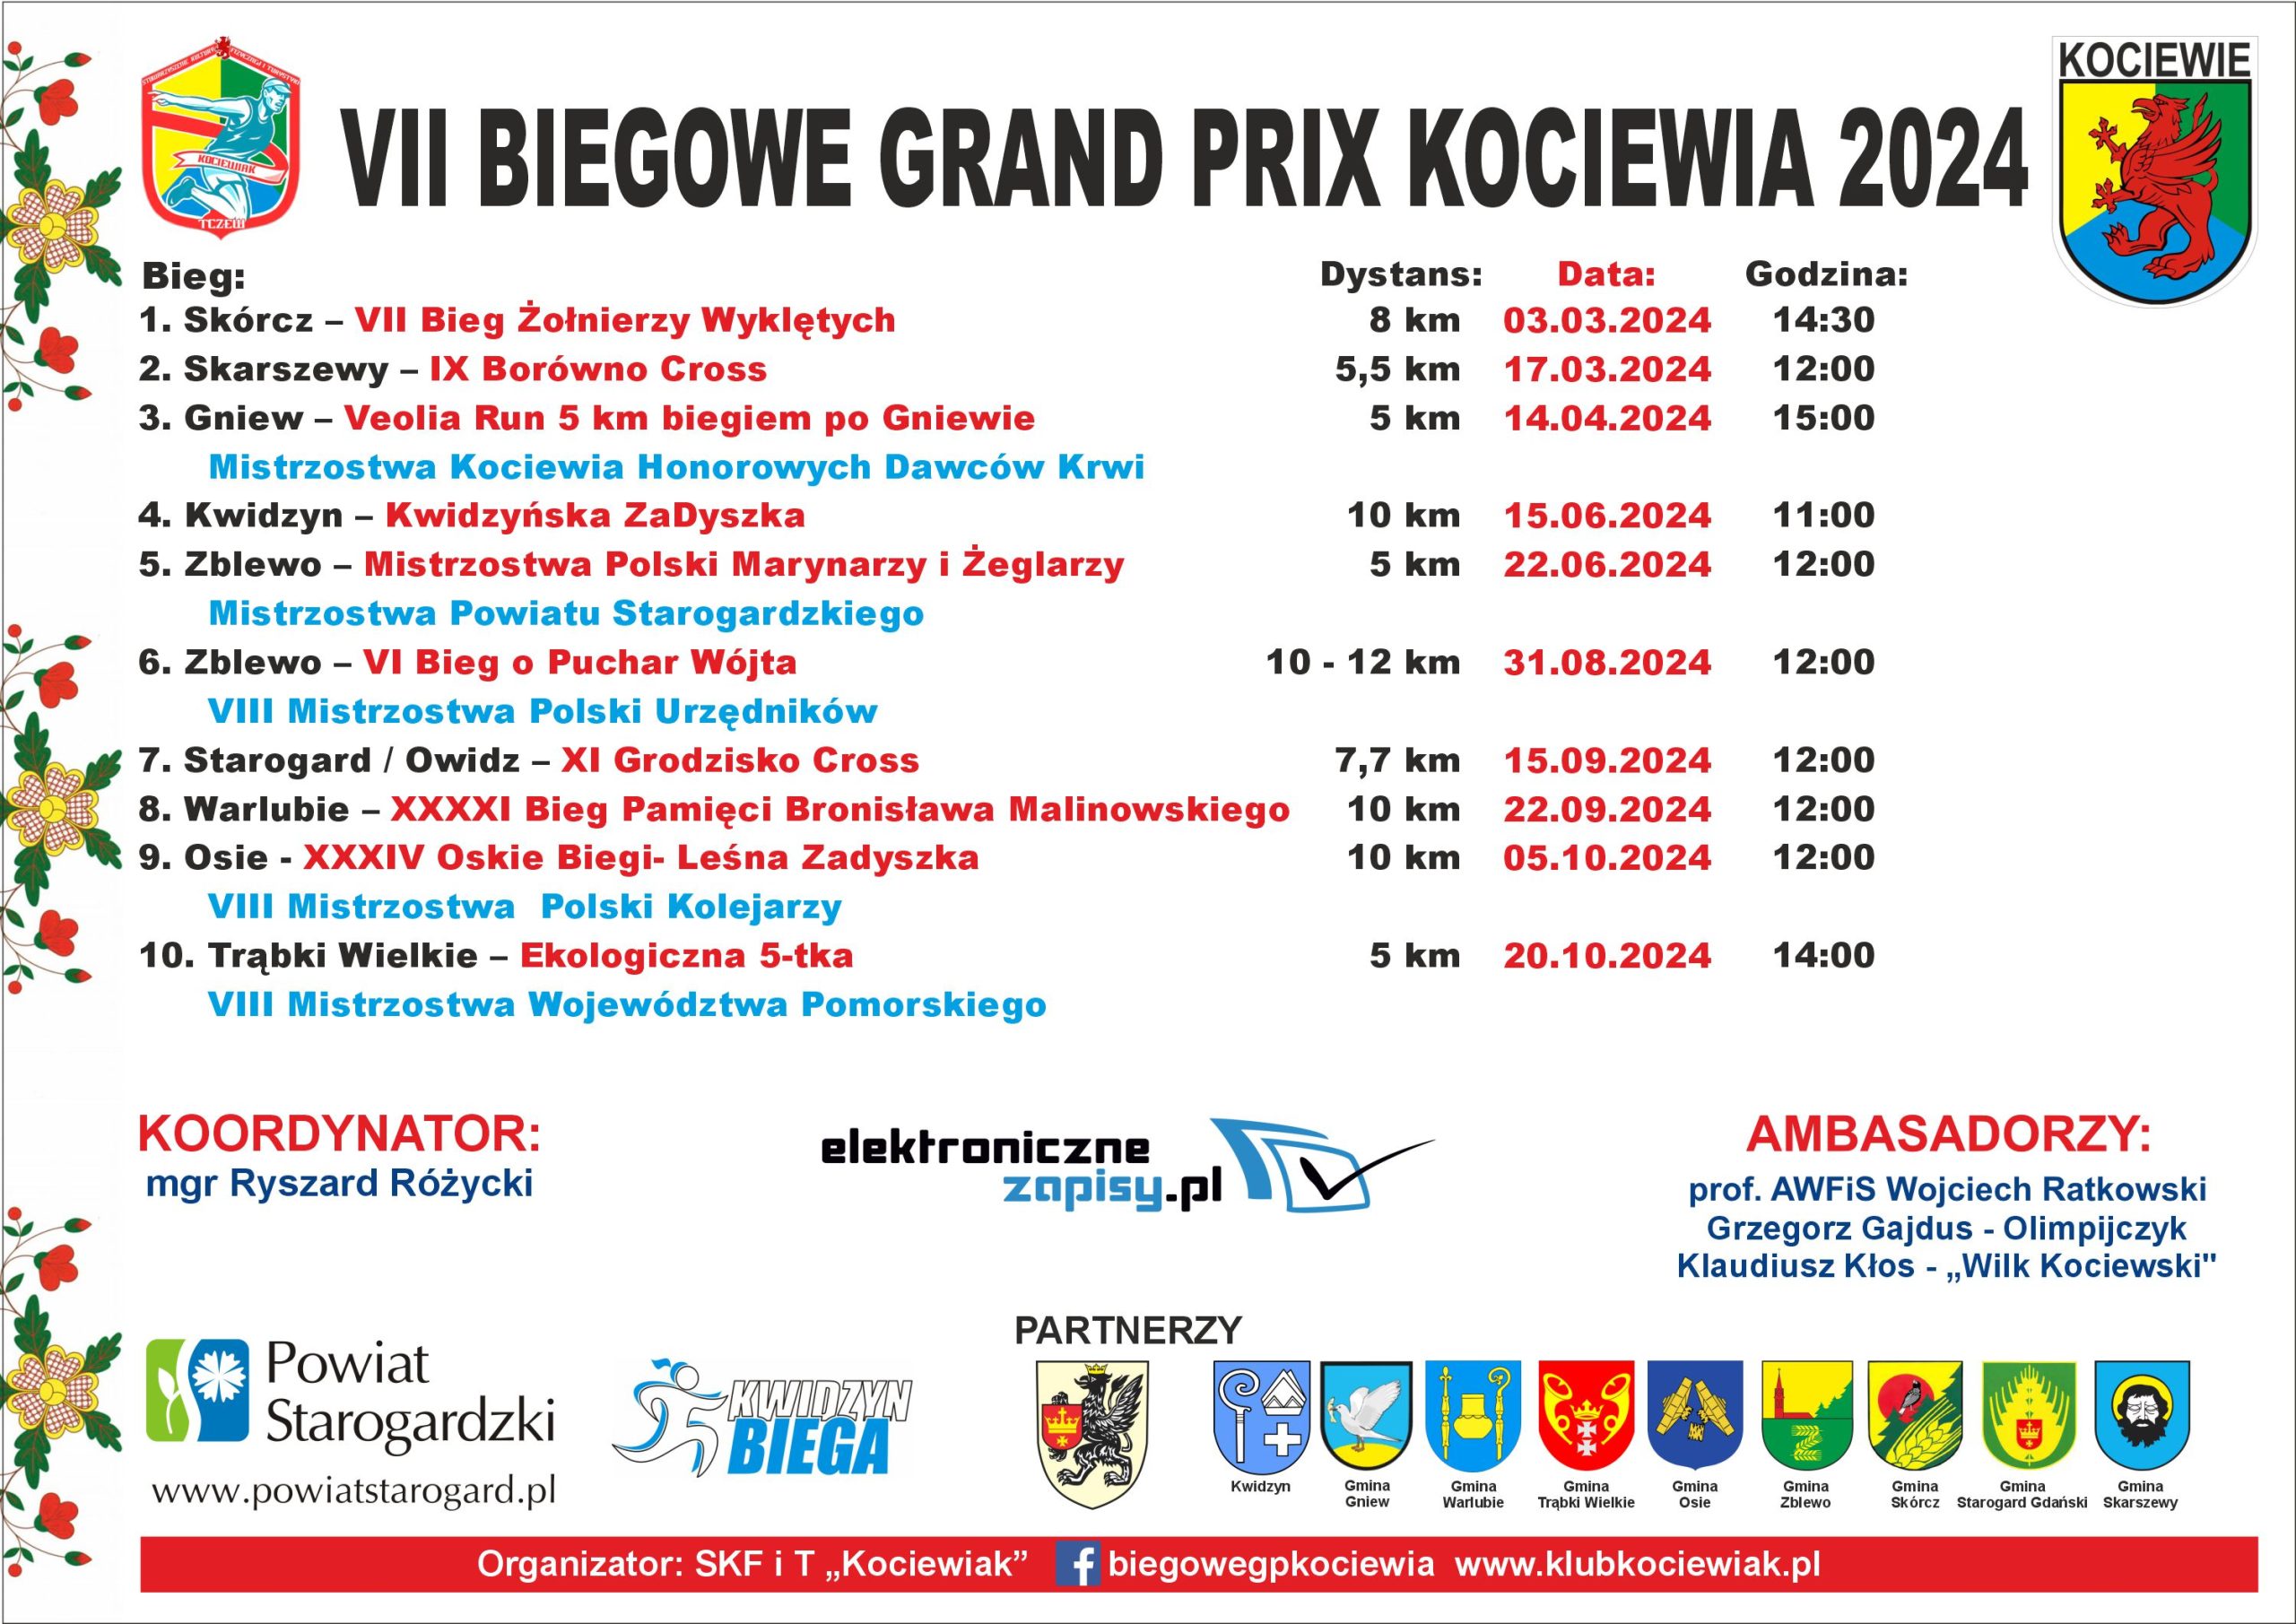 VII Biegowe Grand Prix Kociewia